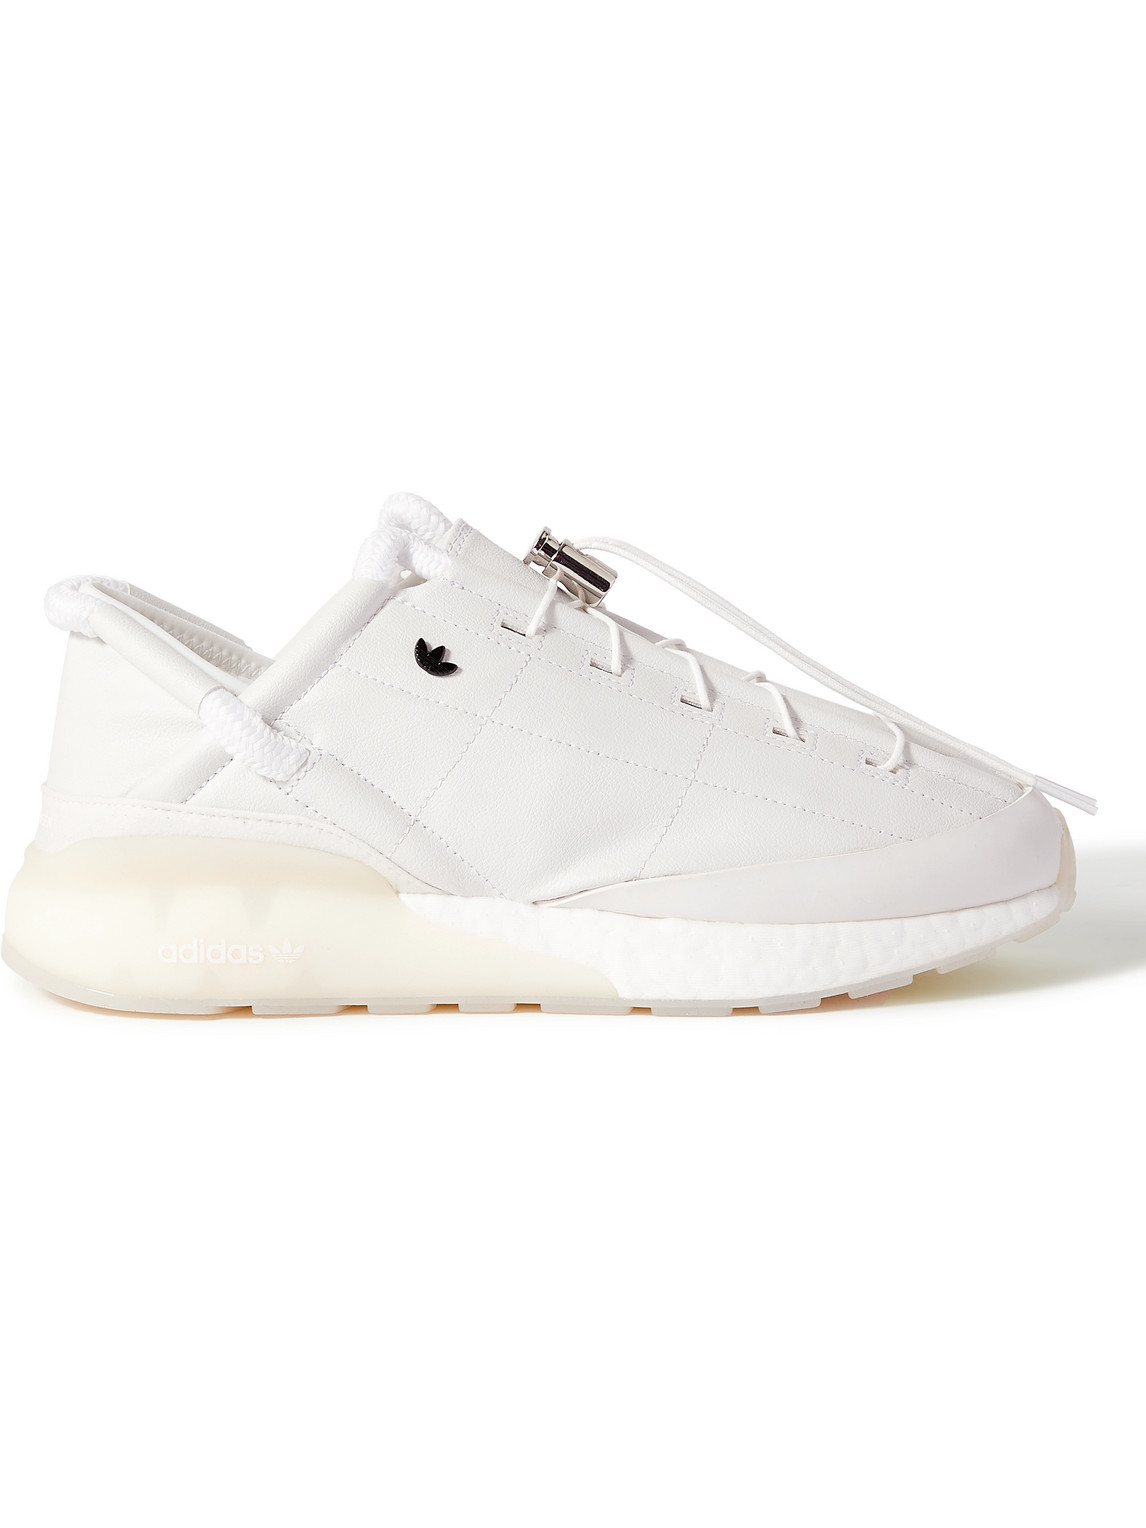 Adidas Consortium Craig Green Zx 2k Phormar Ii Leather Sneakers In White